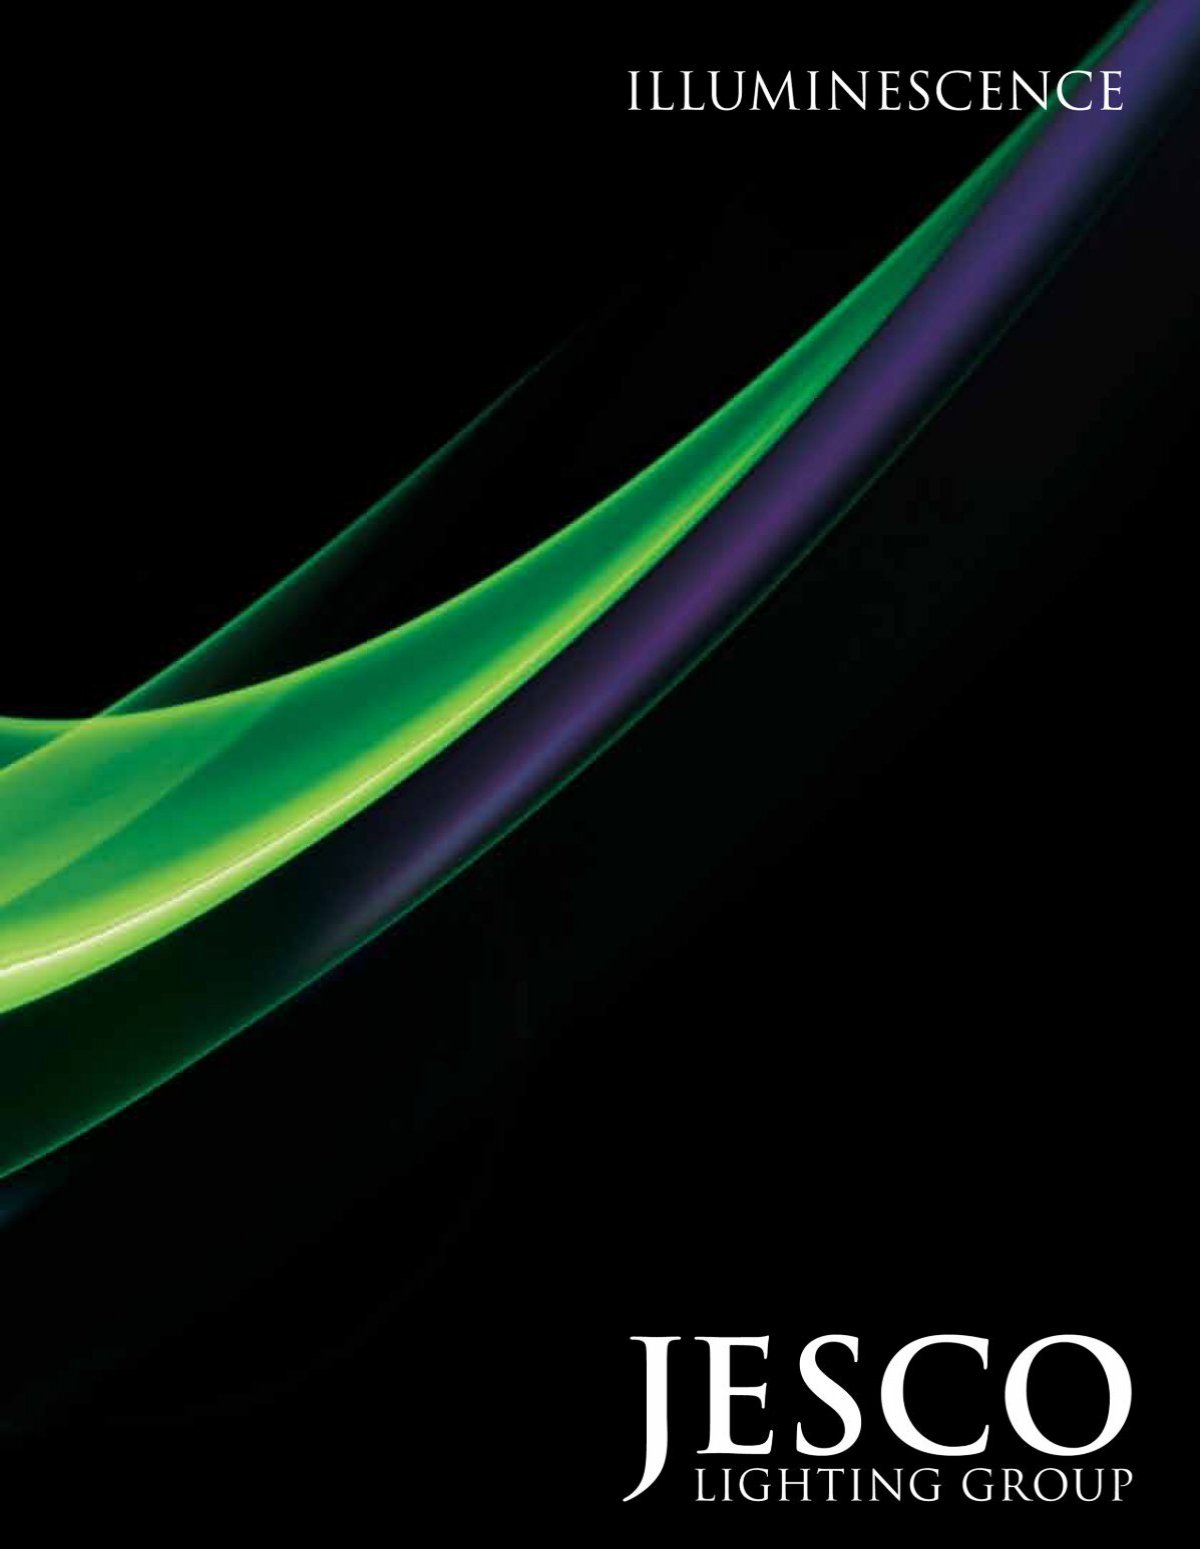 Illuminescence - Jesco Lighting